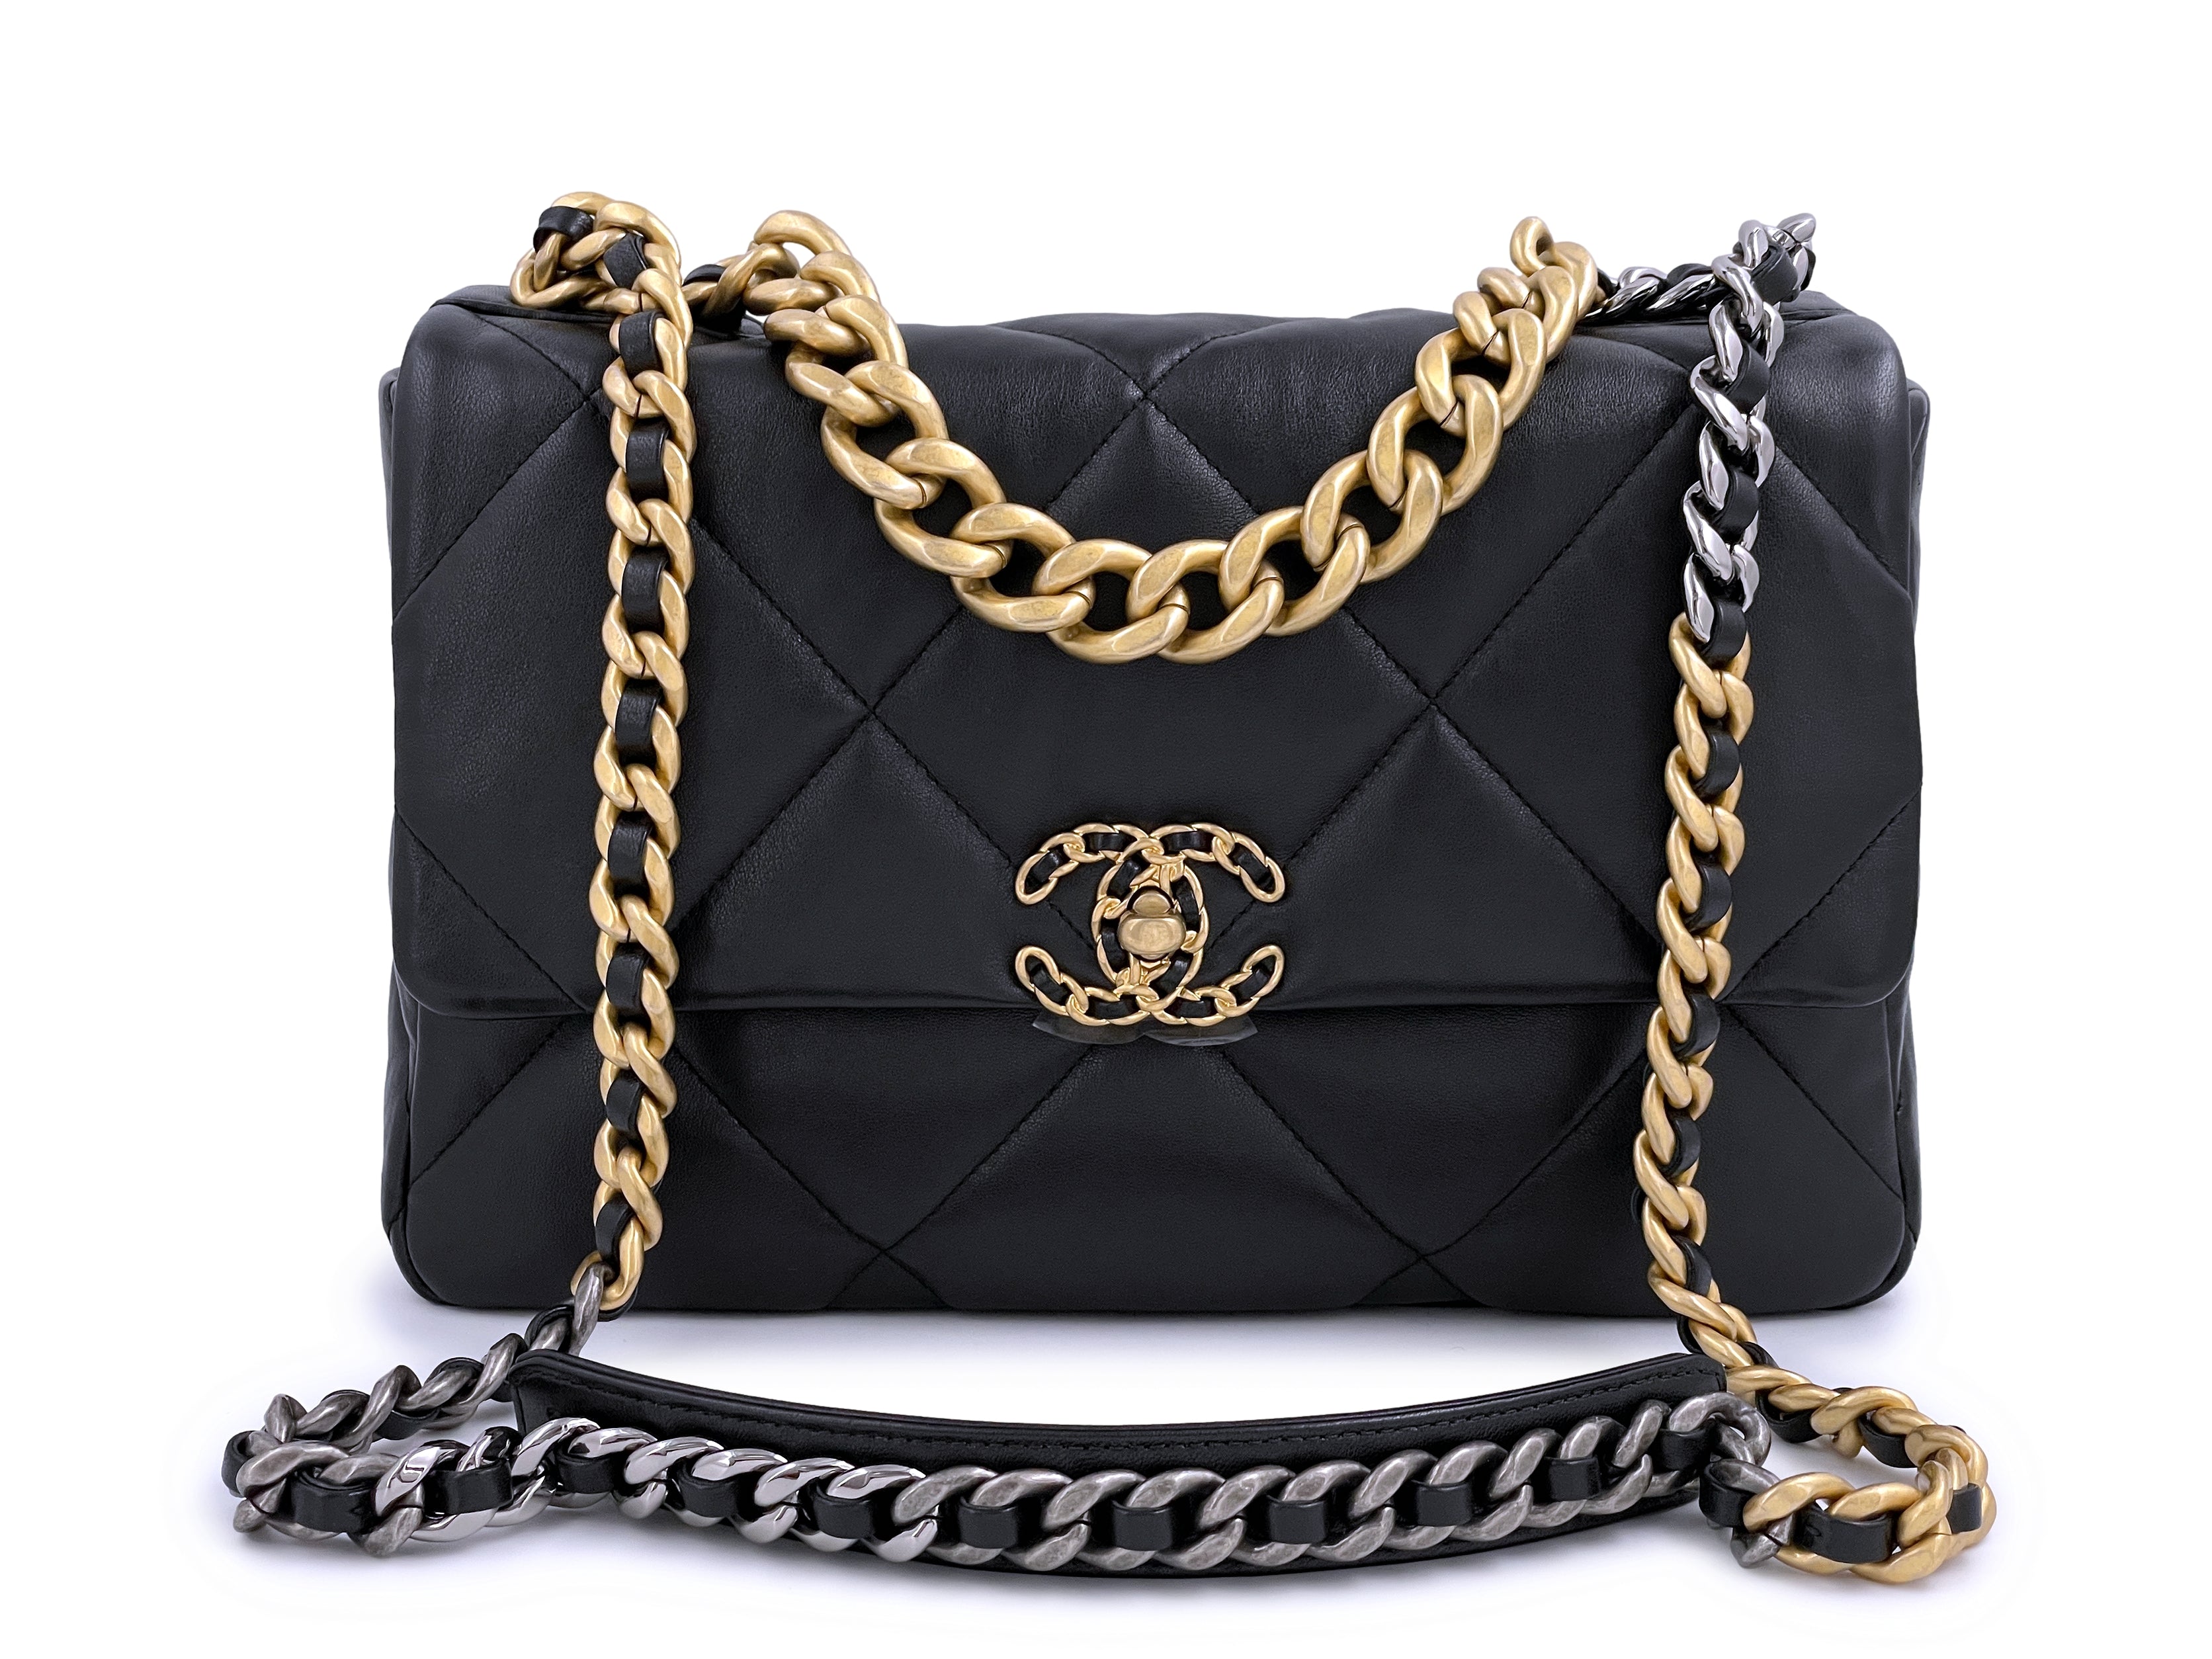 Shop CHANEL Chanel 19 Large Handbag (AS1161 B04852 94305) by CATSUSELECT